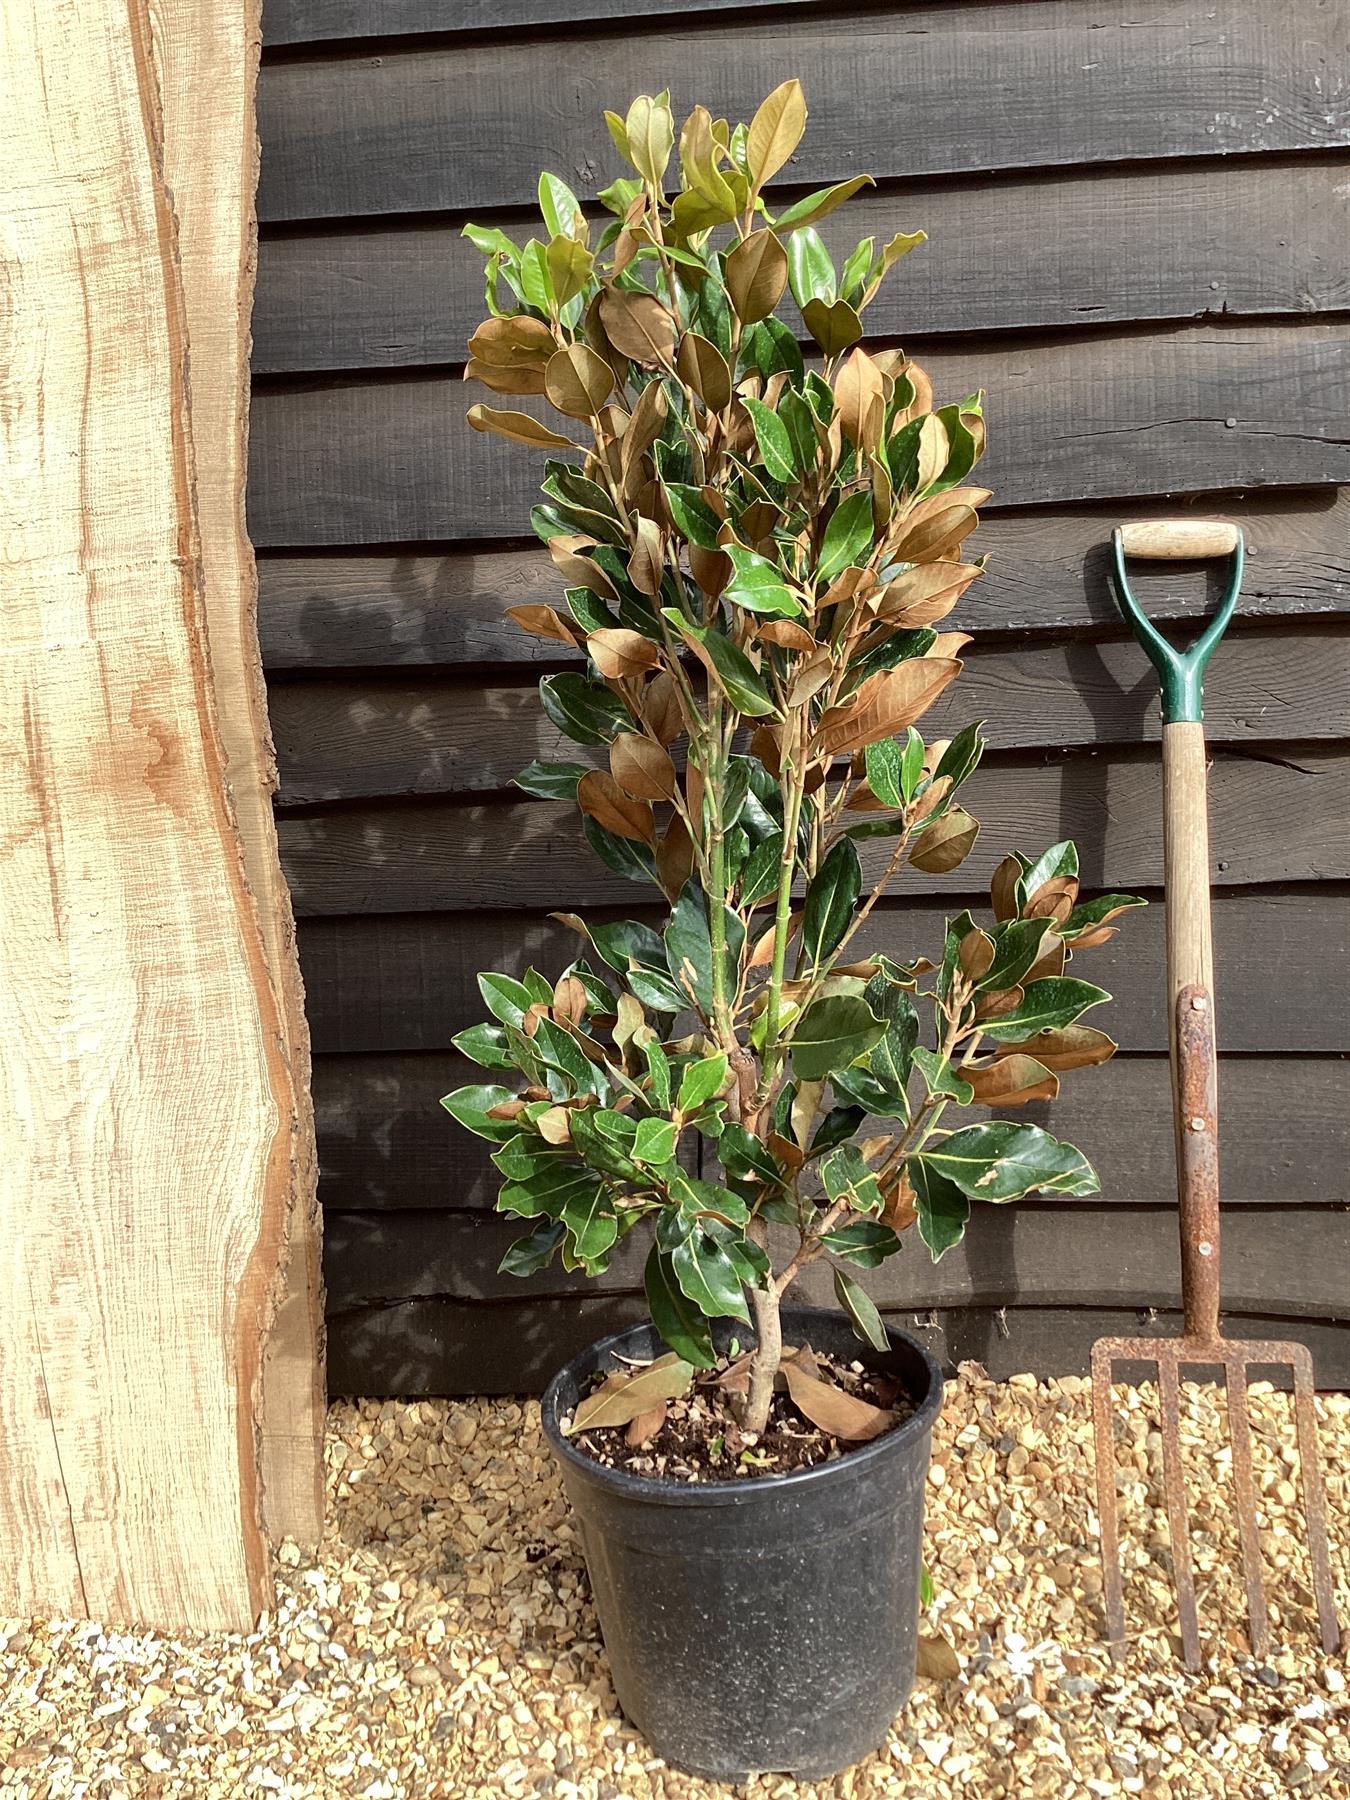 Magnolia Grandiflora Little Gem | Southern Magnolia ‘Little Gem’ - 130-140cm, 15lt